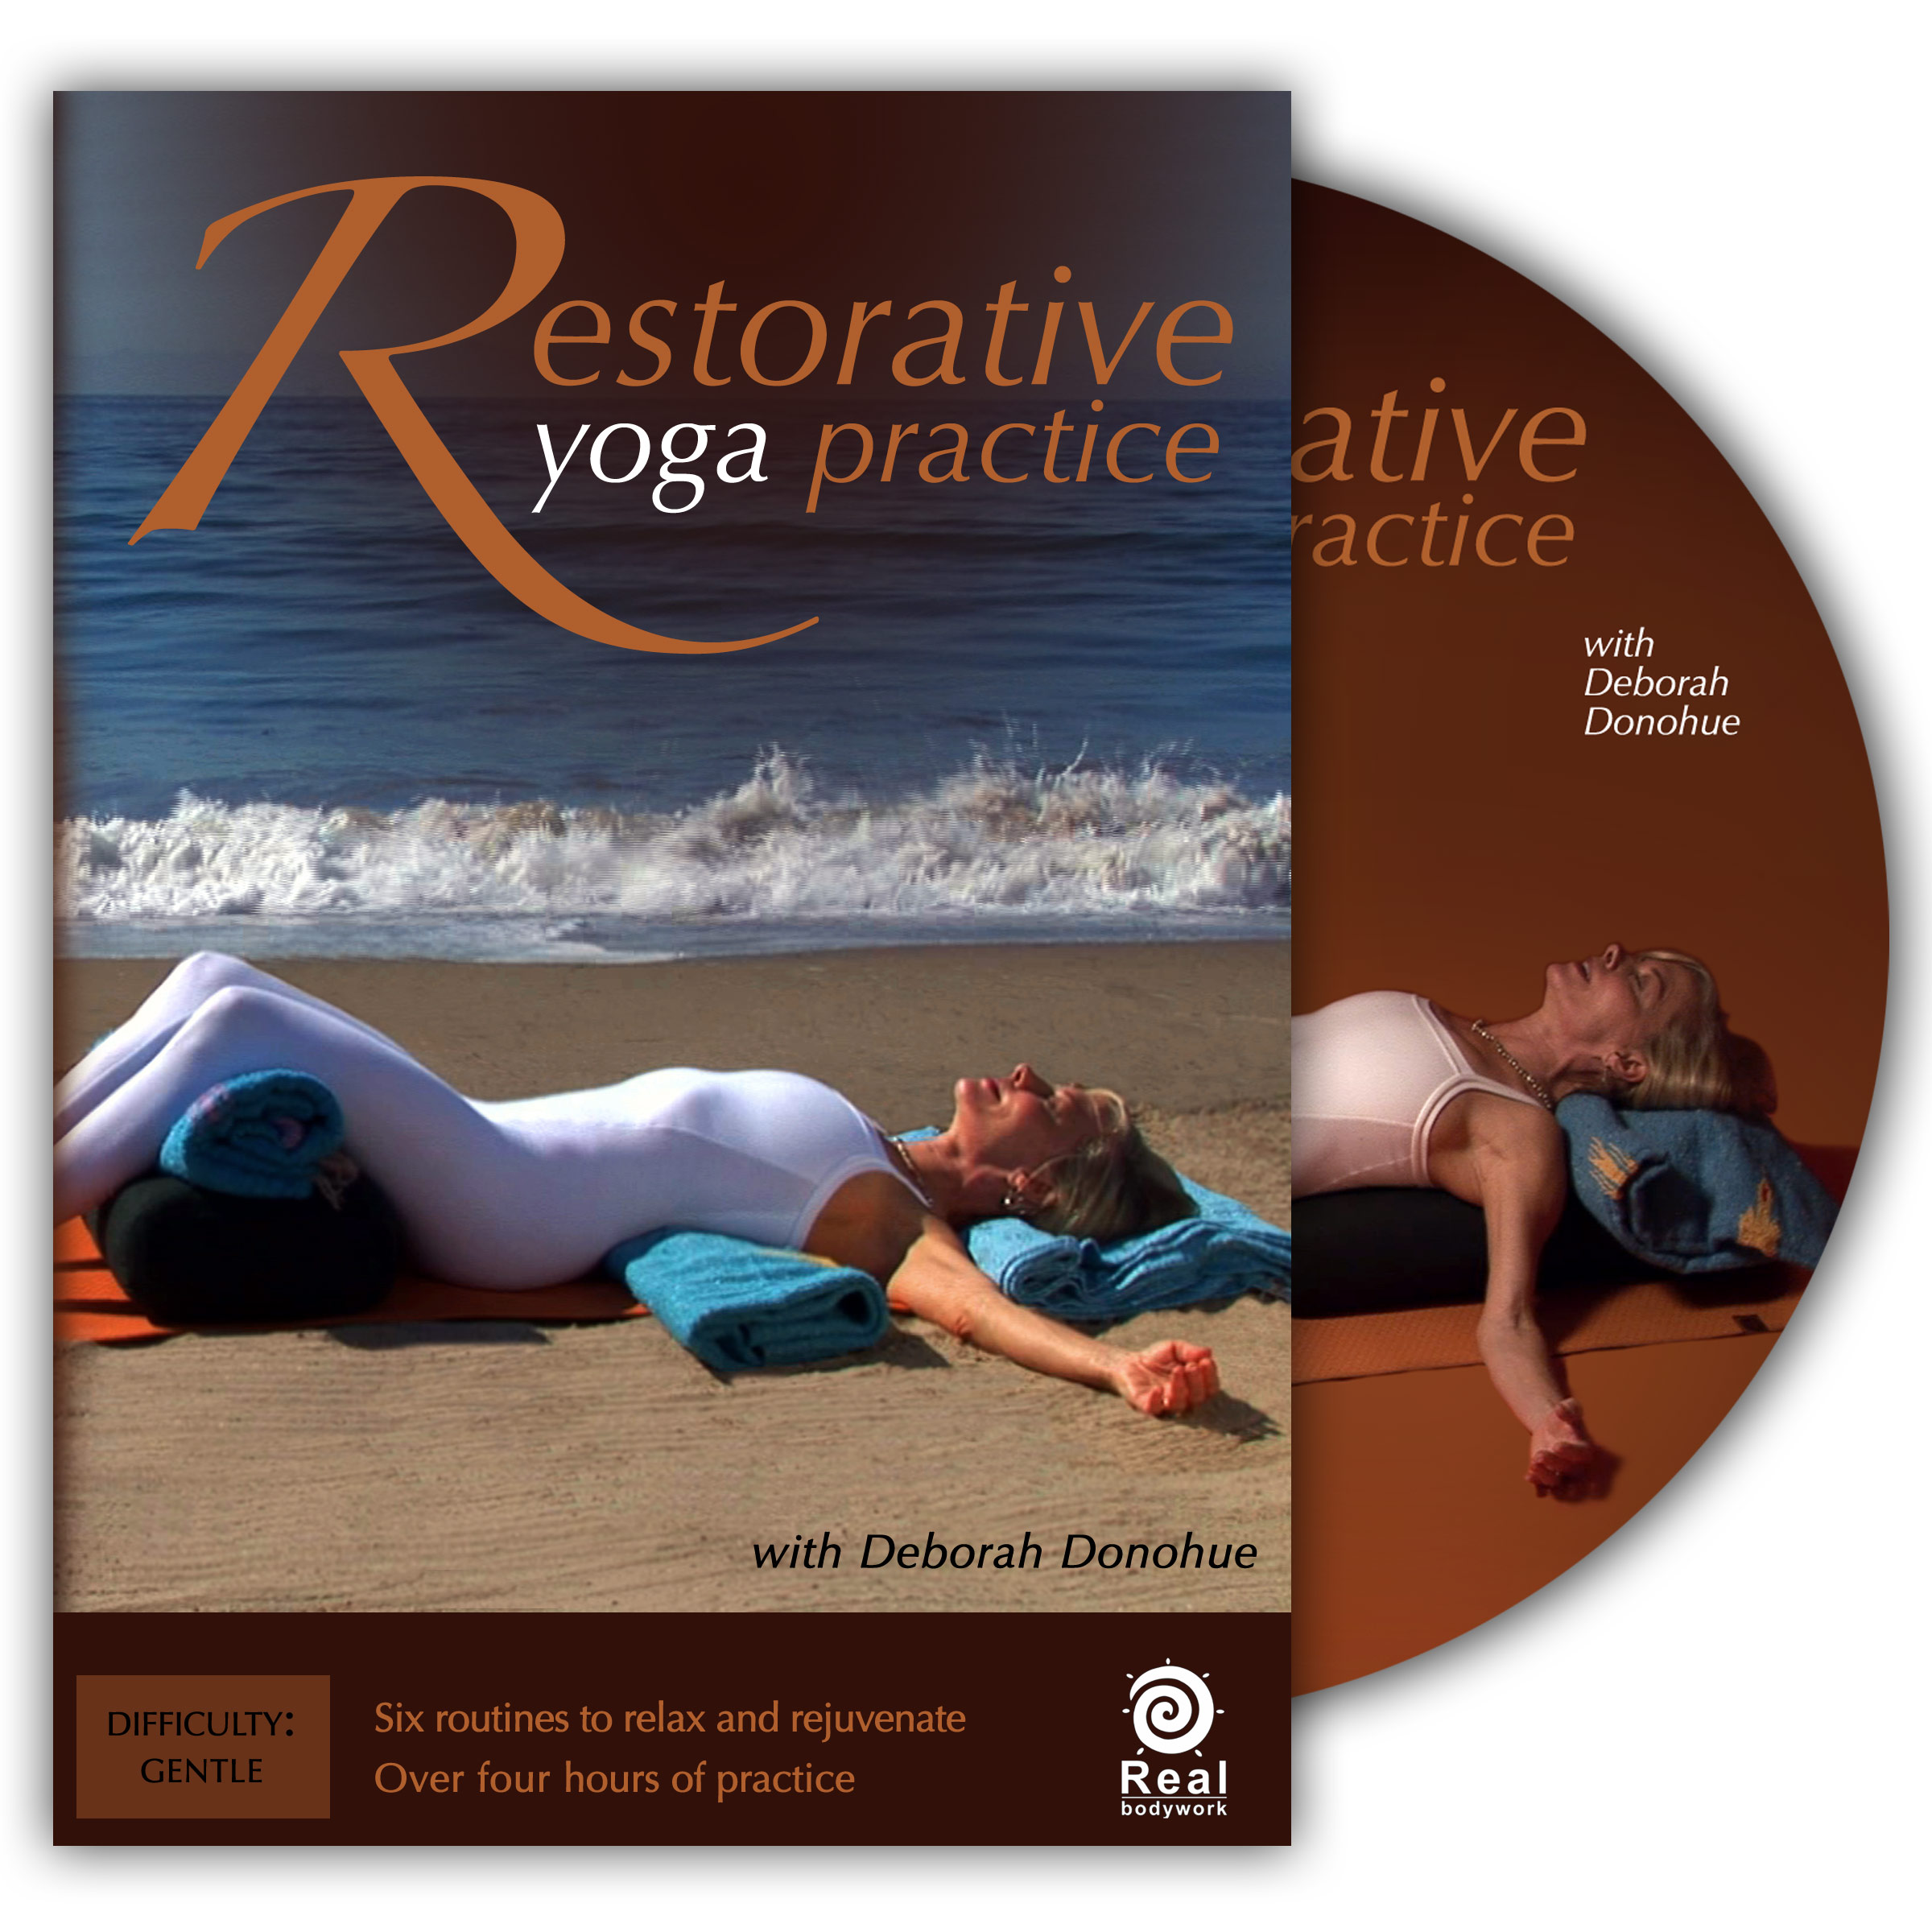 https://www.realbodywork.com/wp-content/uploads/2015/06/yoga-restorative.jpg